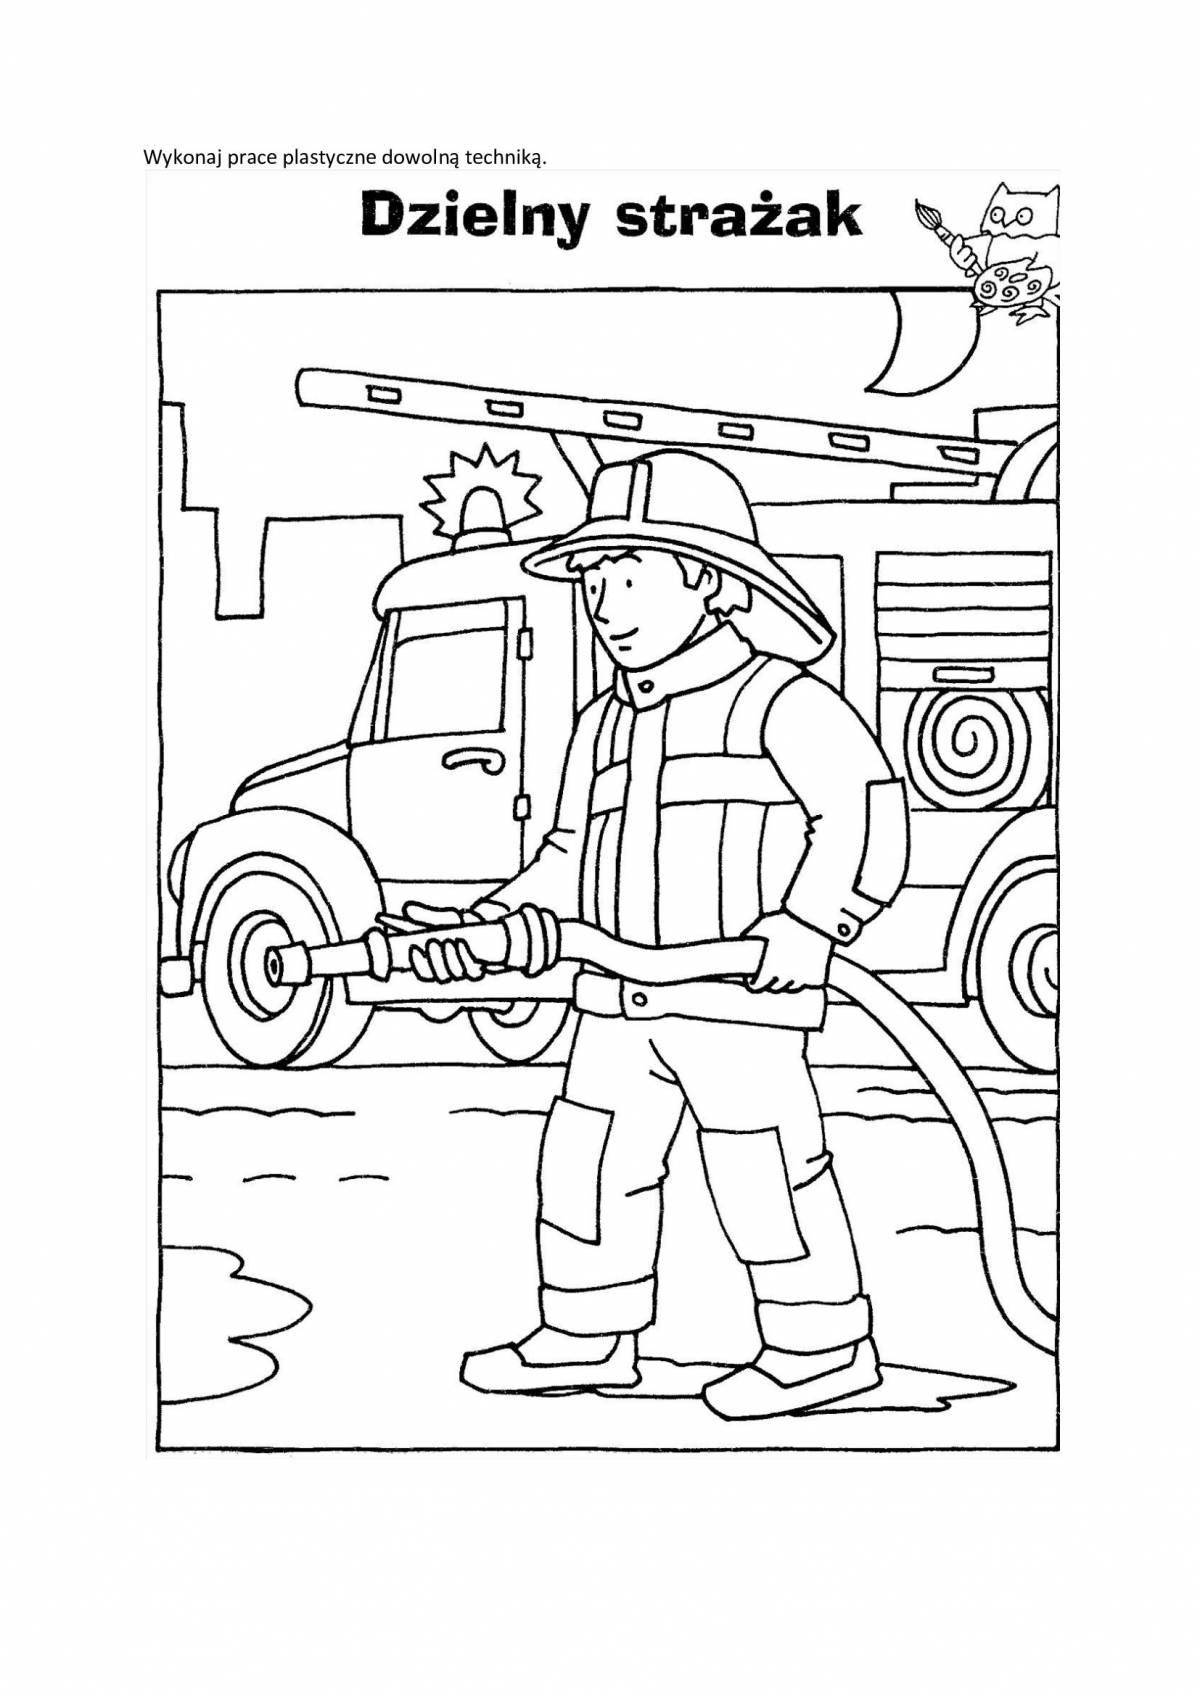 Magic fireman drawing for kids